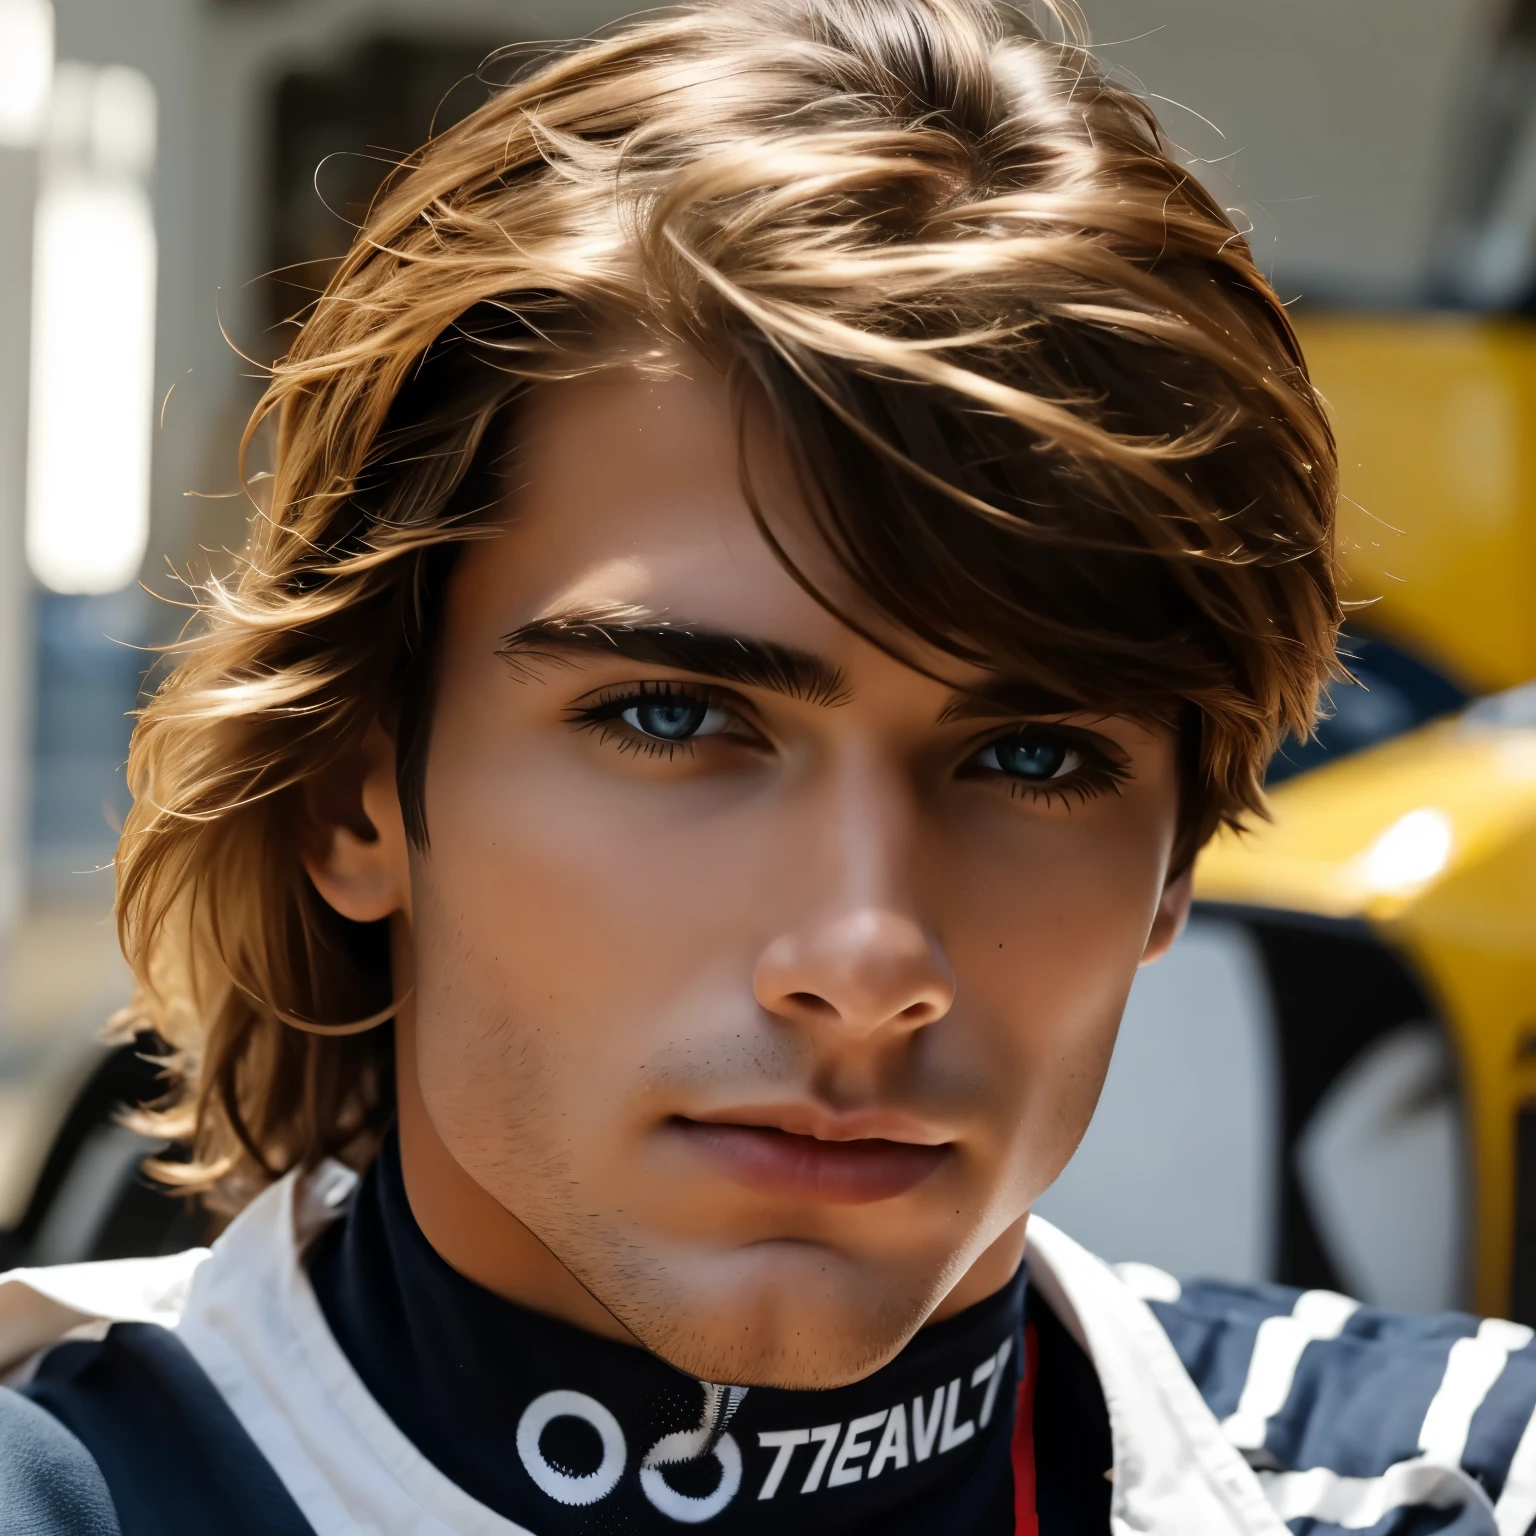 Formula 1 driver man with light brown hair and eyes, shorth hair 